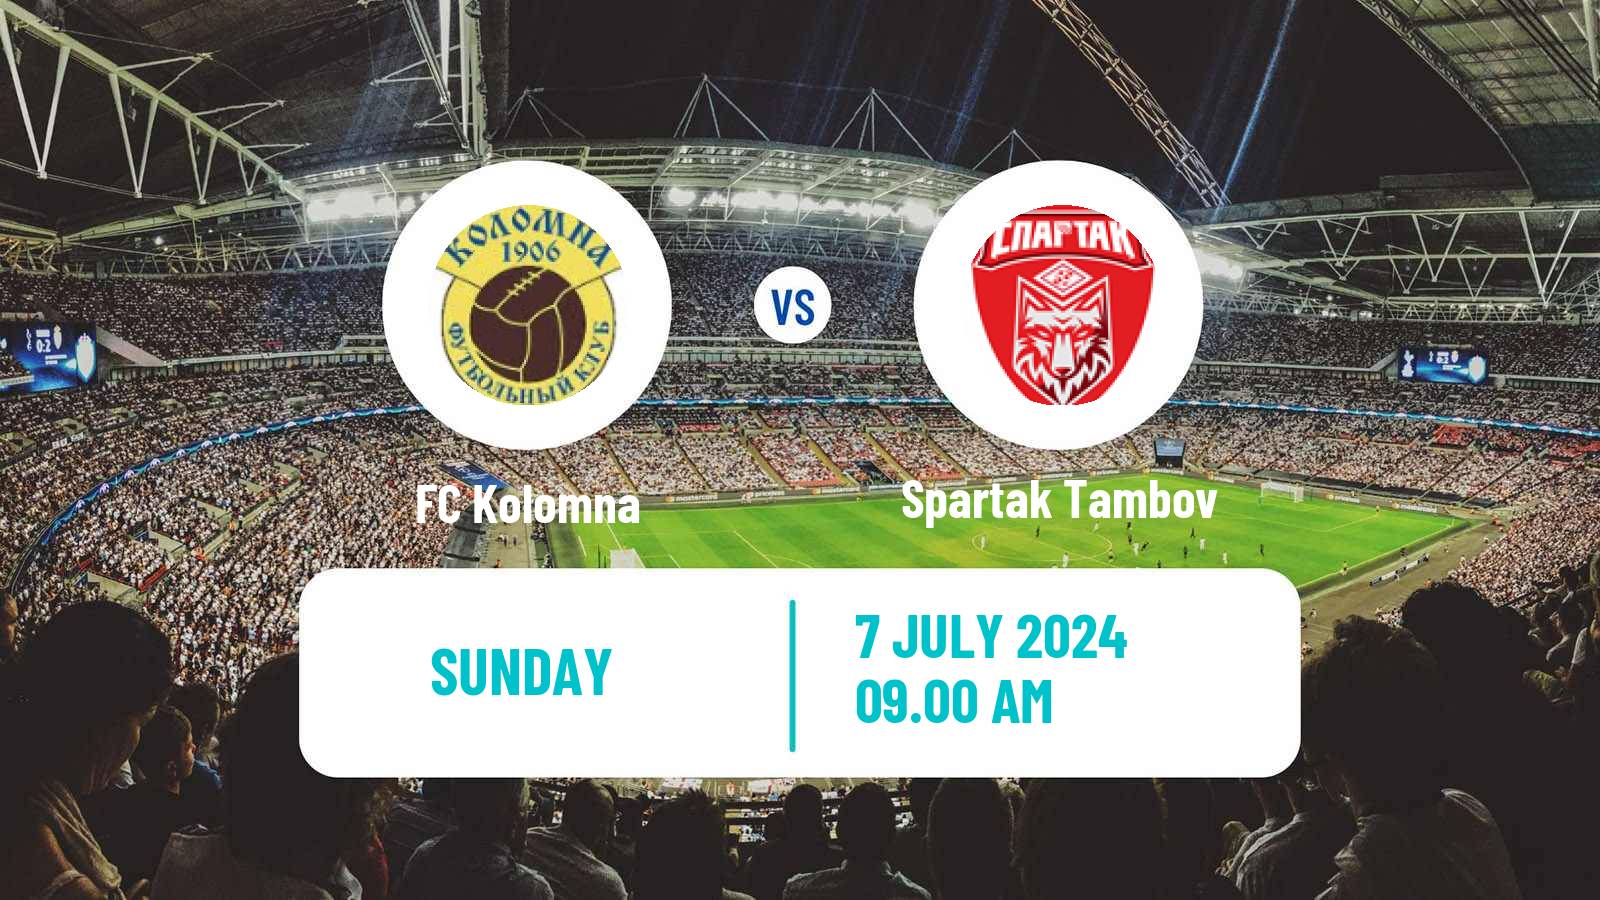 Soccer FNL 2 Division B Group 3 Kolomna - Spartak Tambov